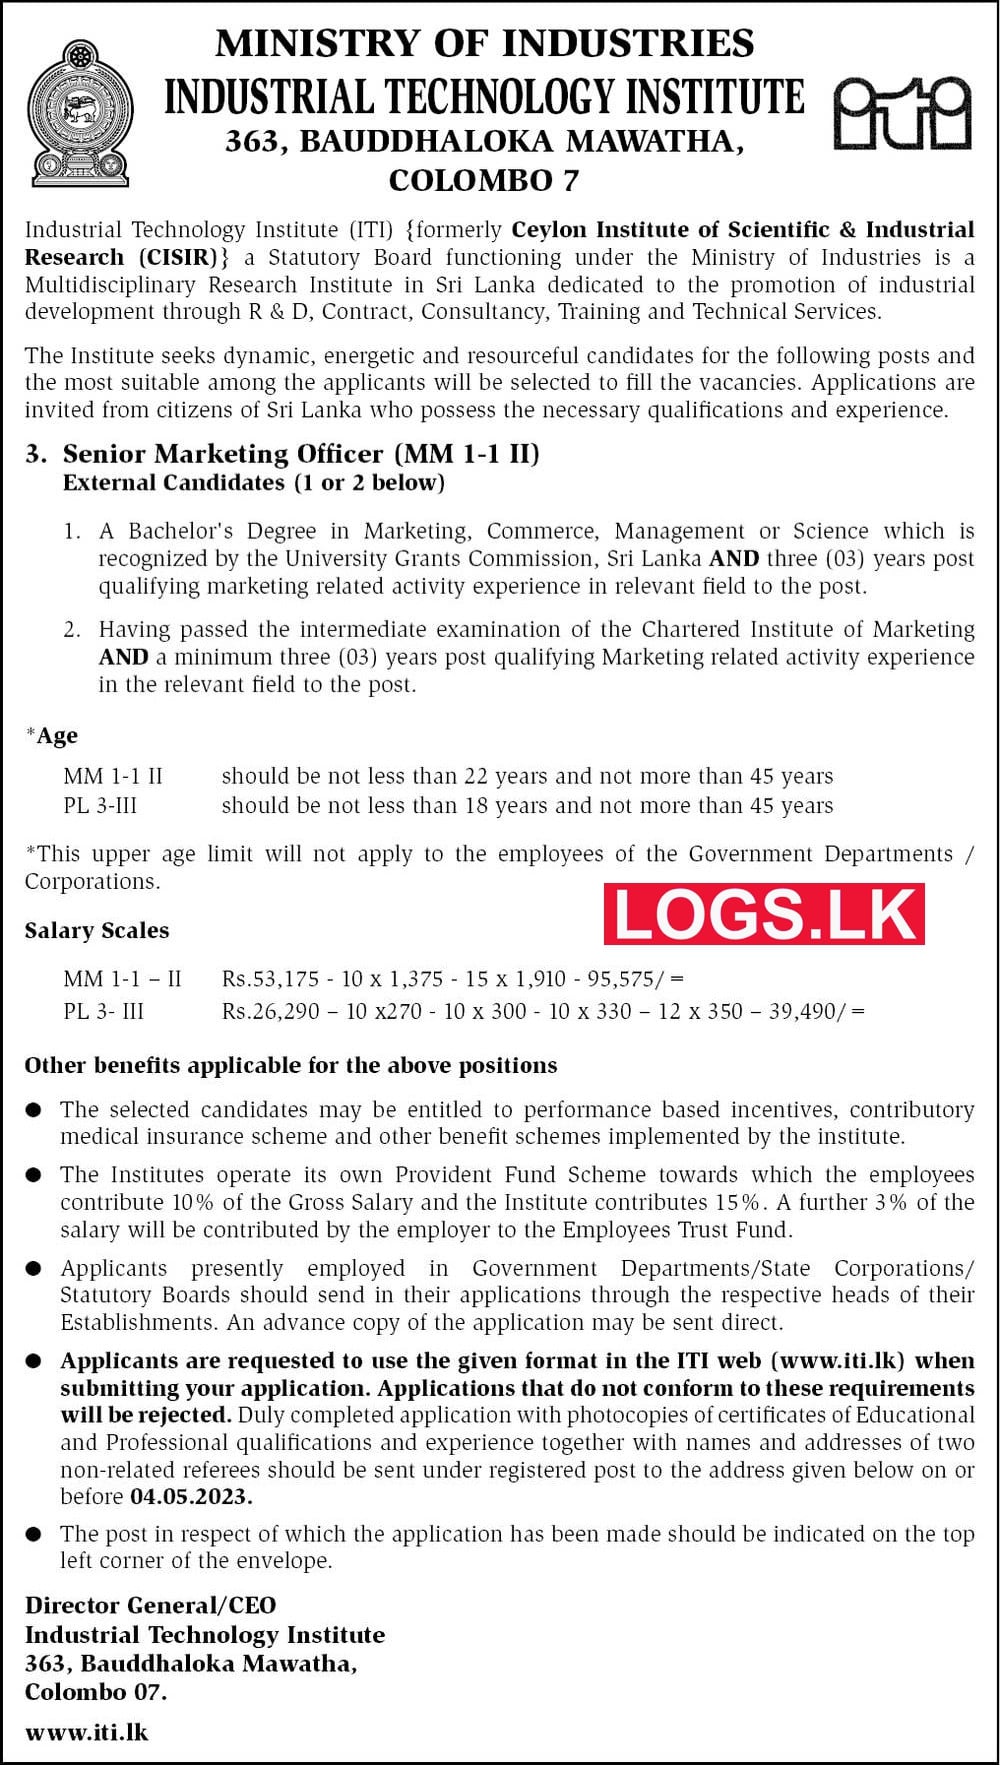 Senior Marketing Officer - Industrial Technology Institute Vacancies 2023 Job Vacancies in Sri Lanka